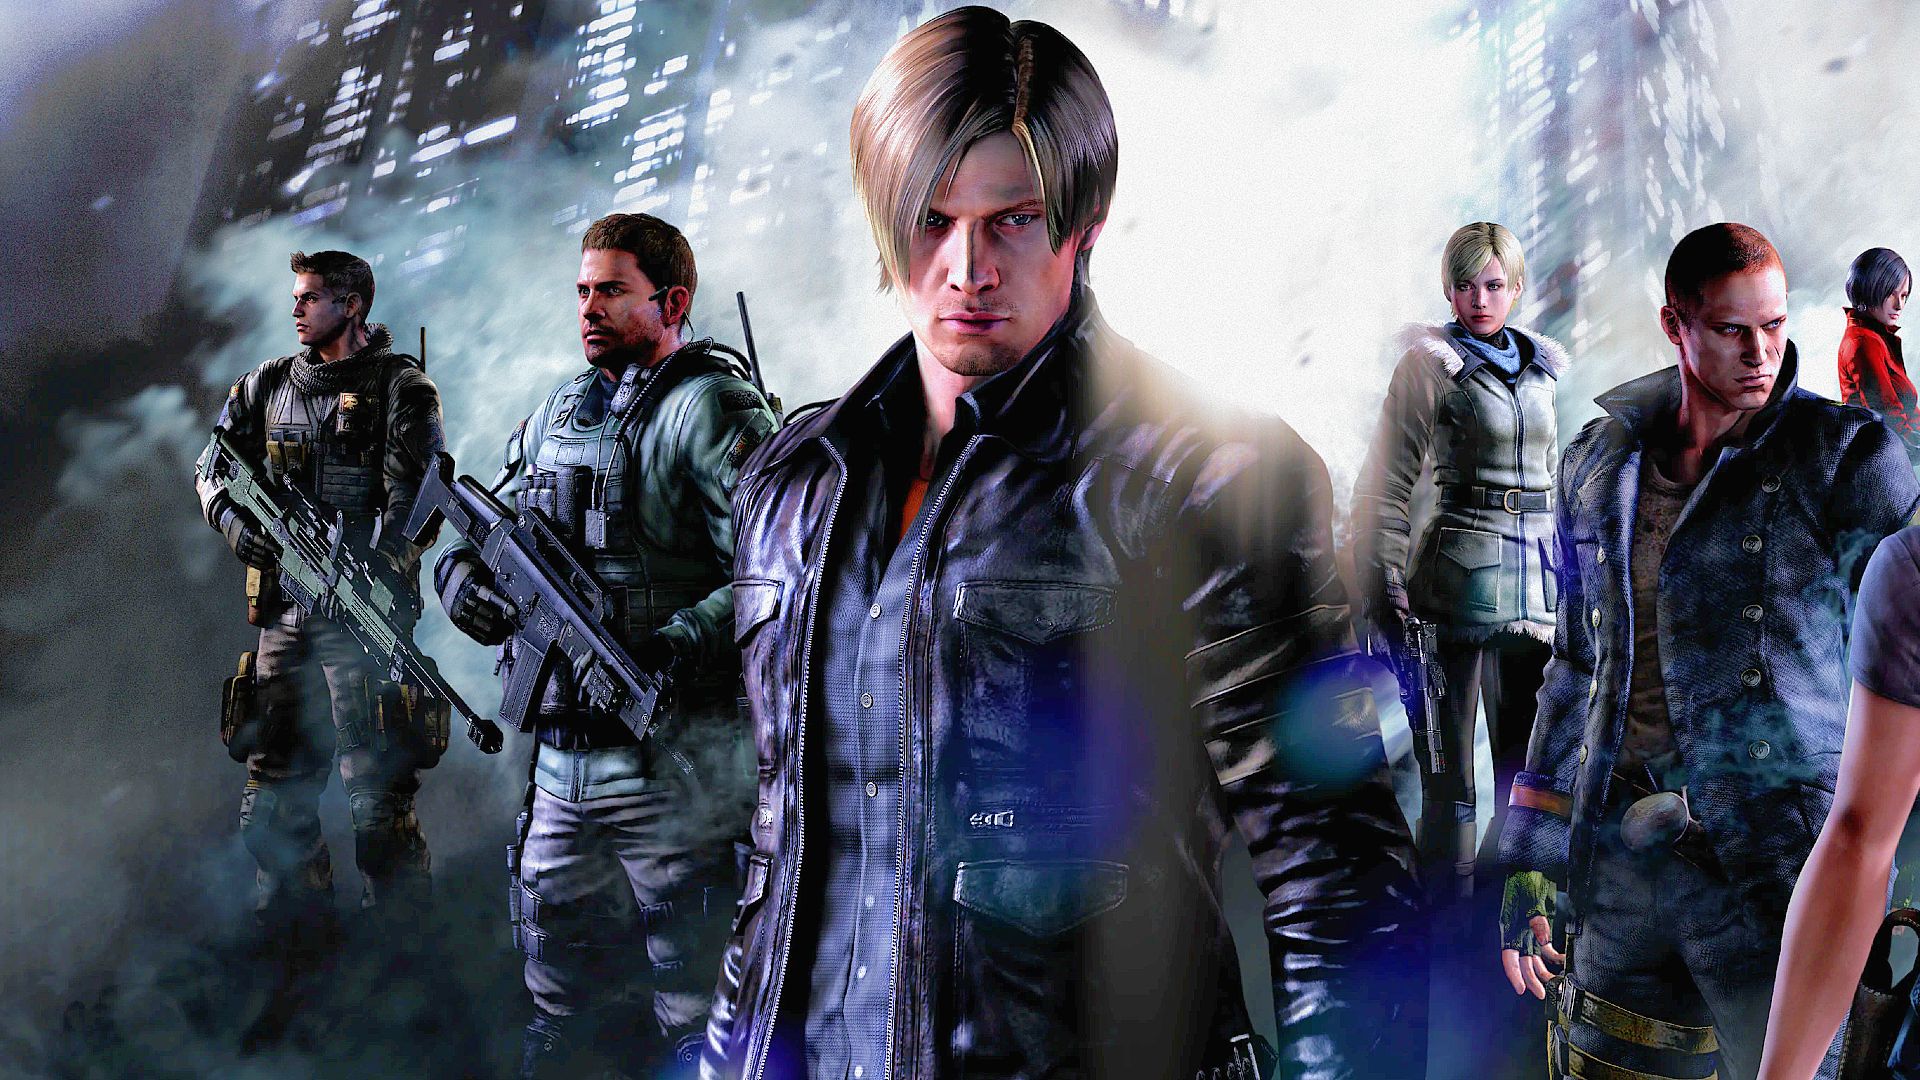 The Best 'Resident Evil' Heroes